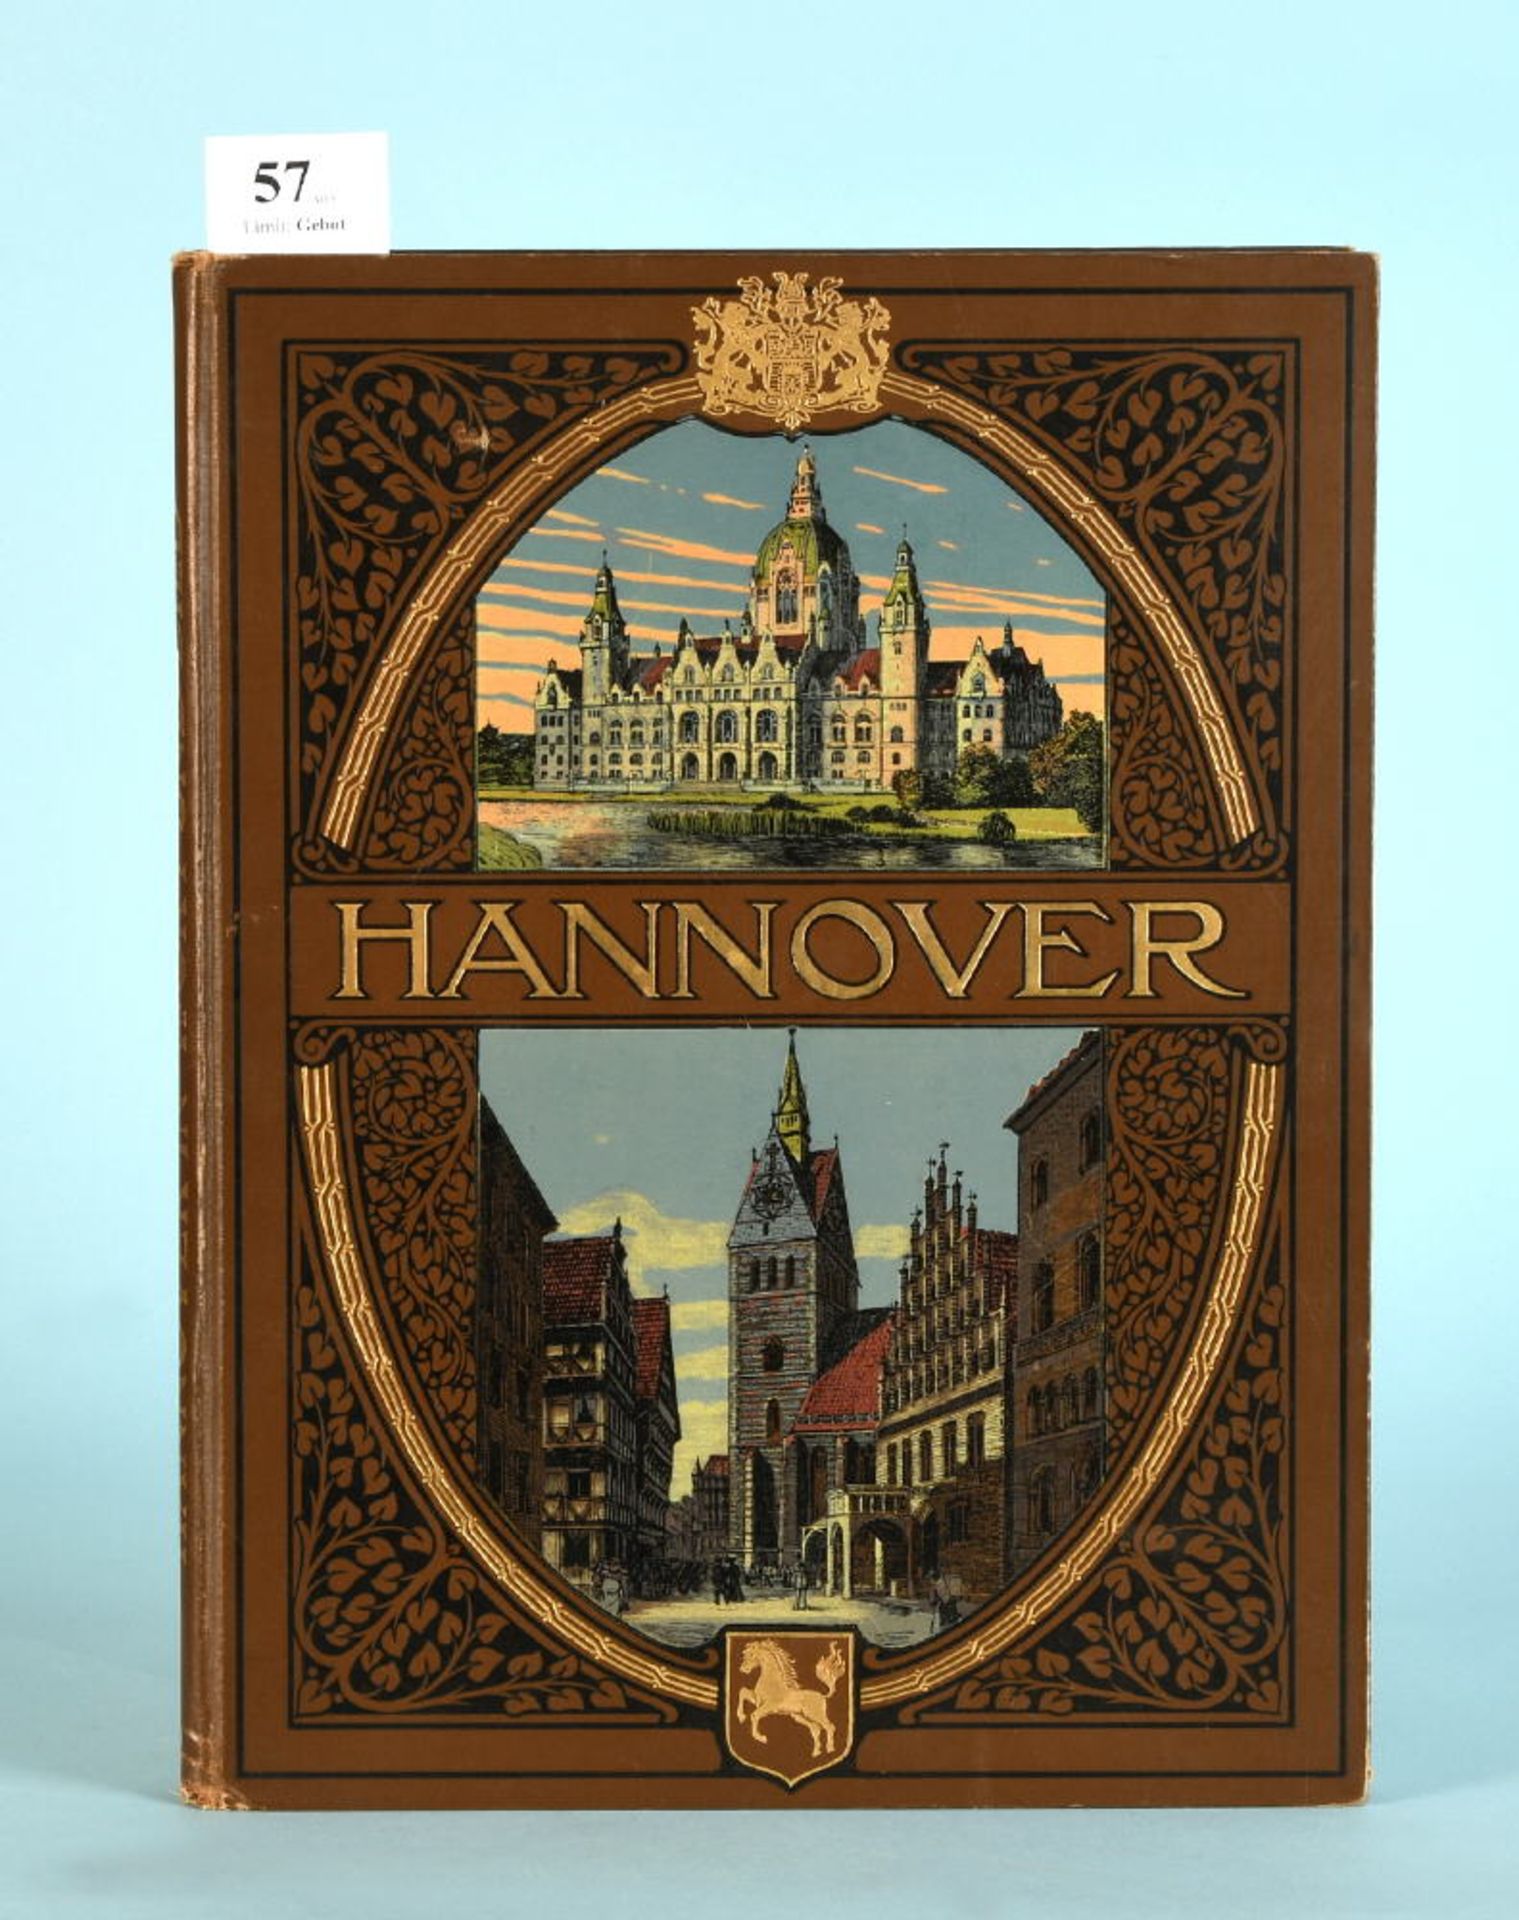 Kiepert, Adolf "Hannover in Wort und Bild"286 Abb., 156 S., Vlg. A. Kiepert, Hannover, 1910, LnE,